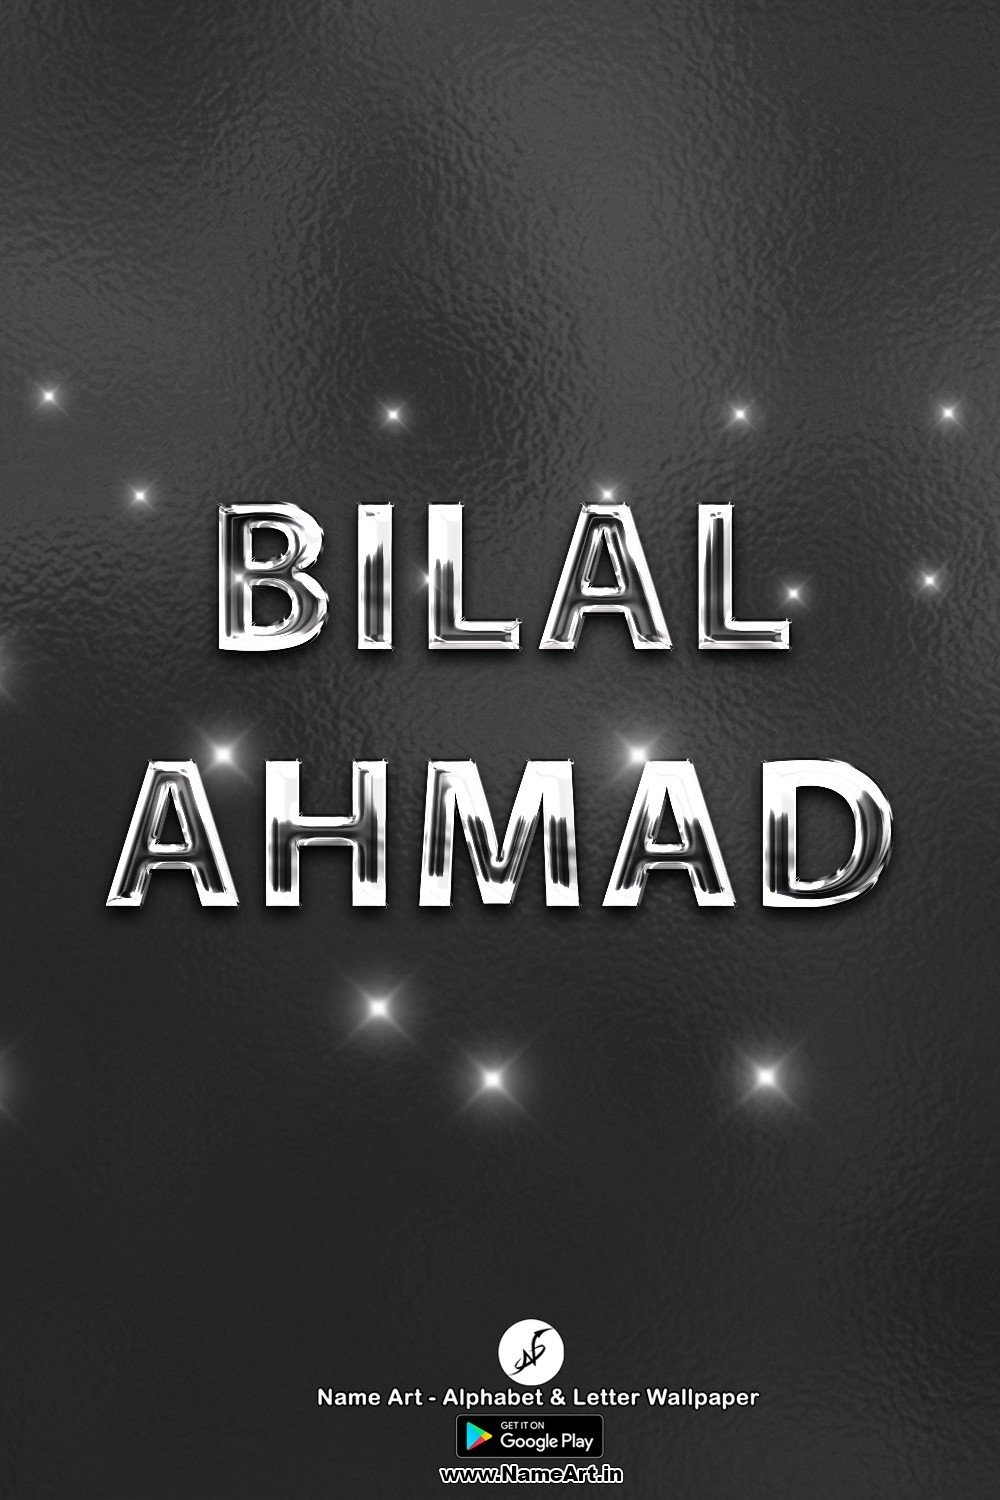 BILAL AHMAD | Whatsapp Status BILAL AHMAD | Happy Birthday To You !! | BILAL AHMAD New Whatsapp Status images |